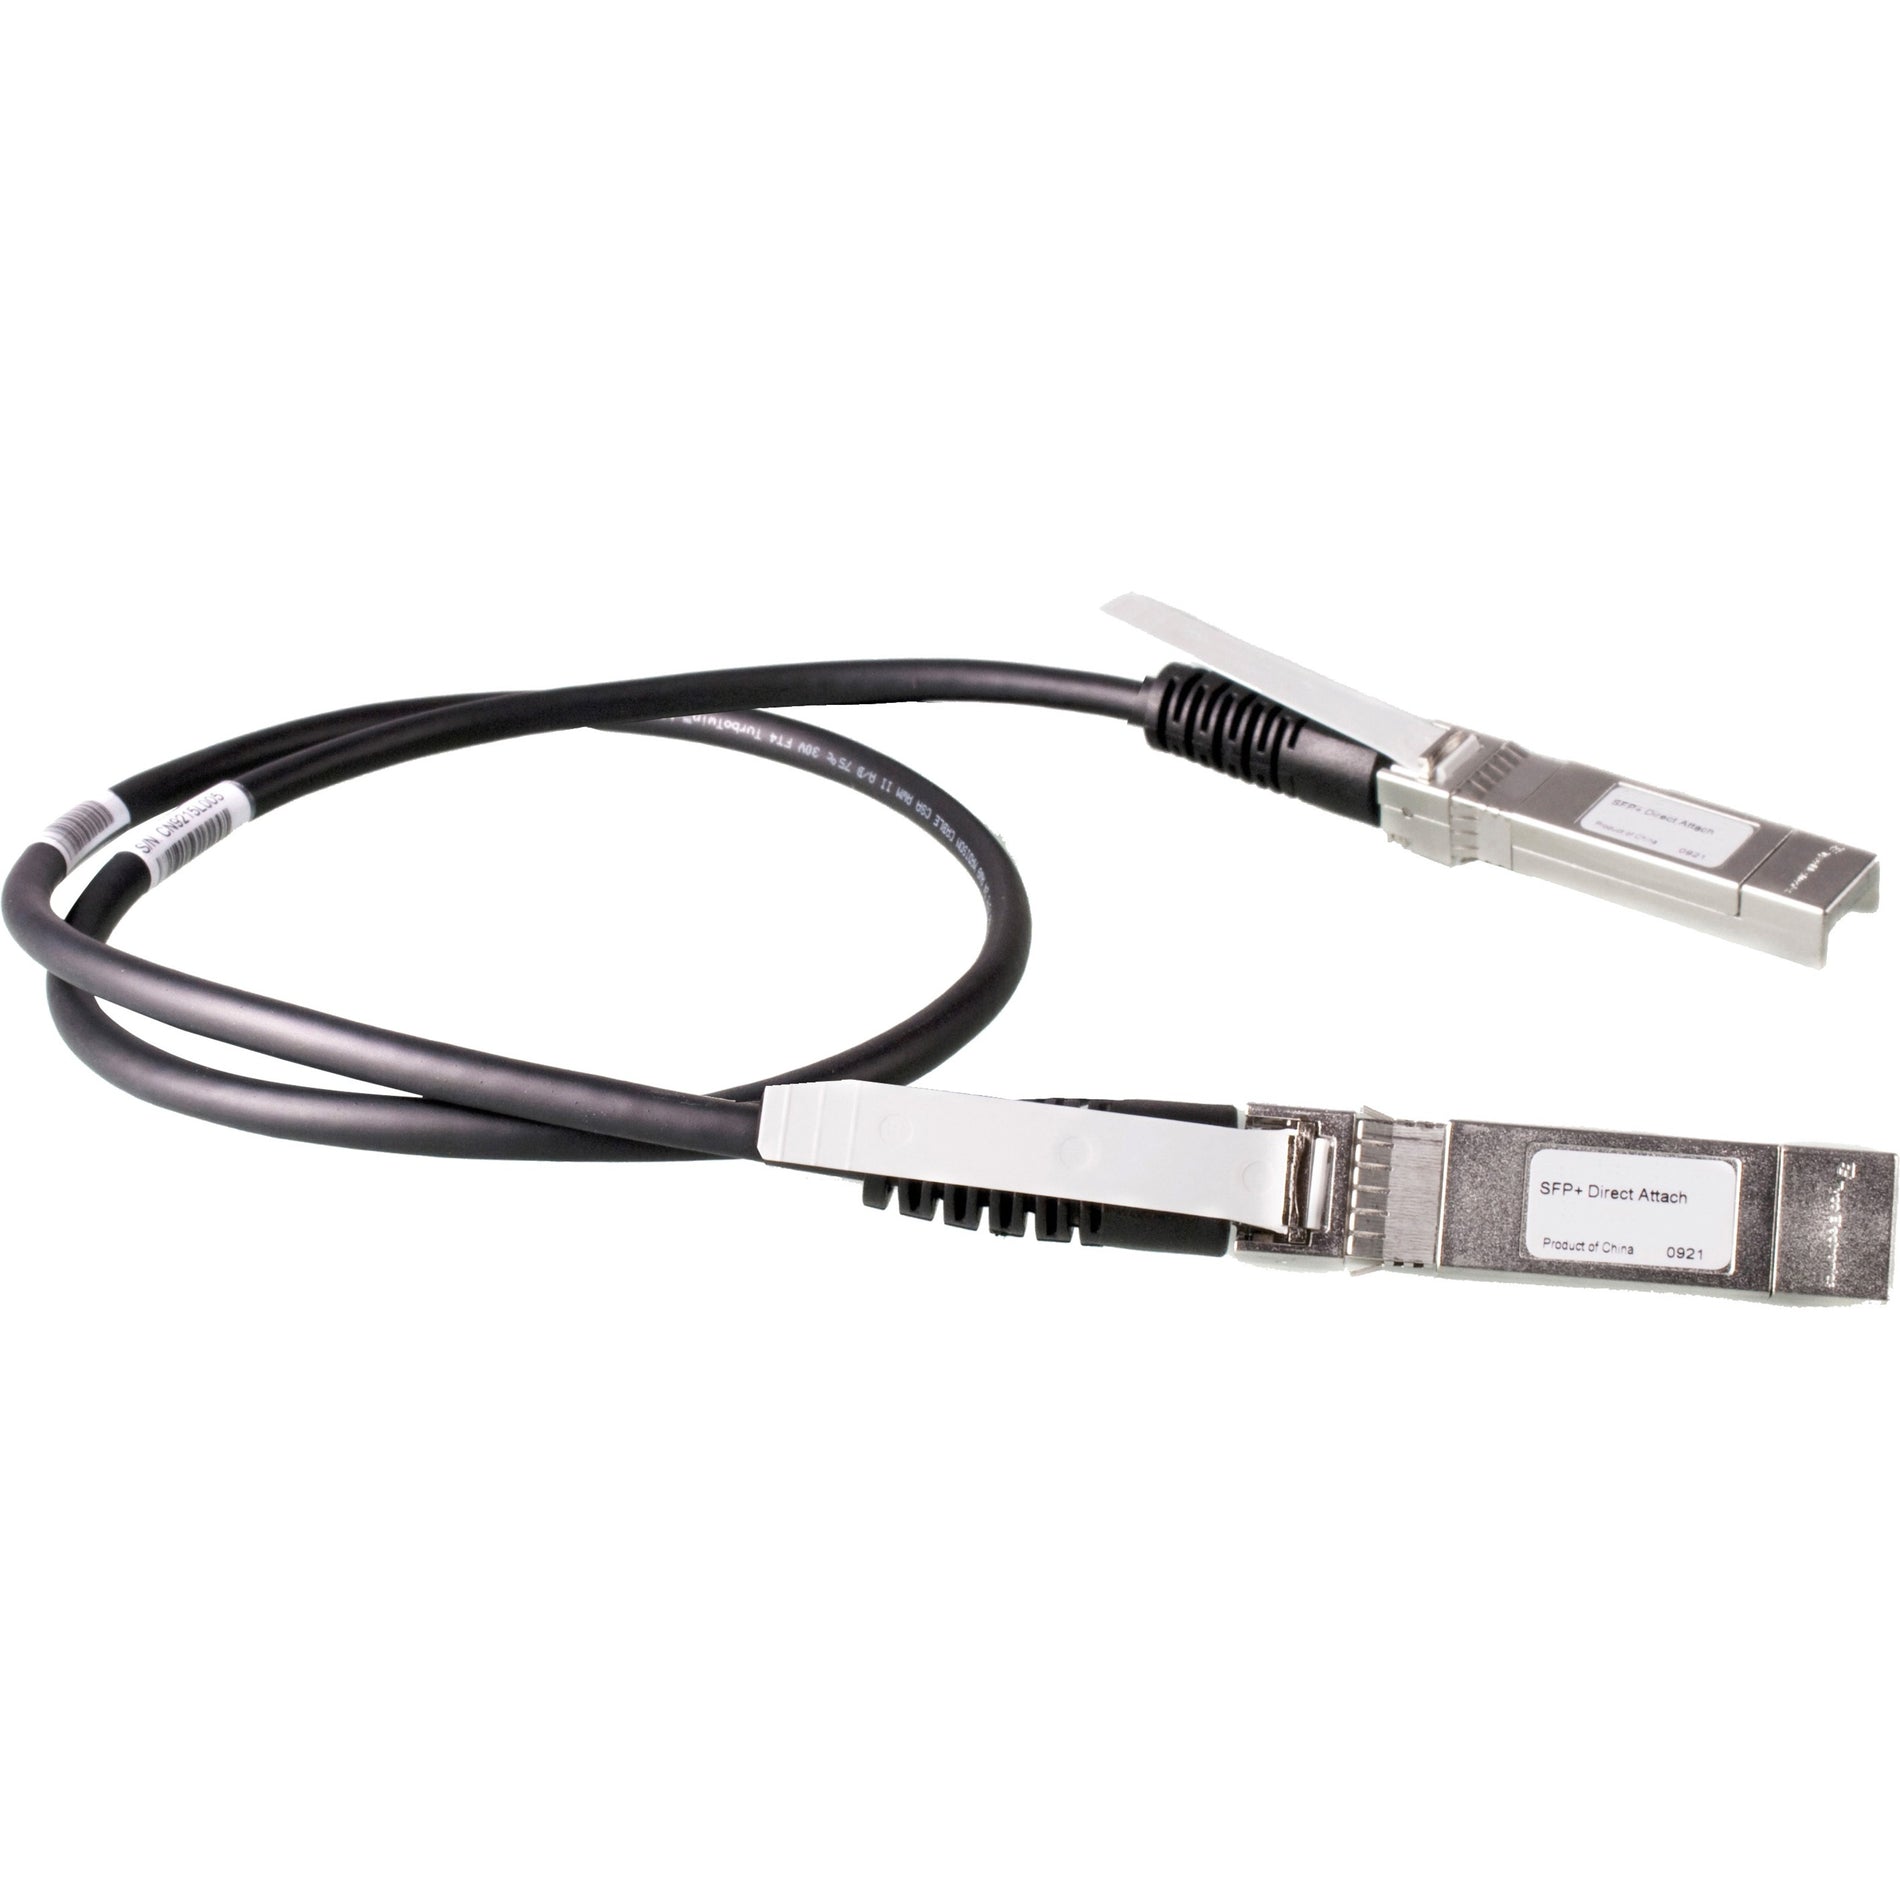 HPE E X240 10G SFP+ to SFP+ 0.65m Direct Attach Copper Cable (JD095C)